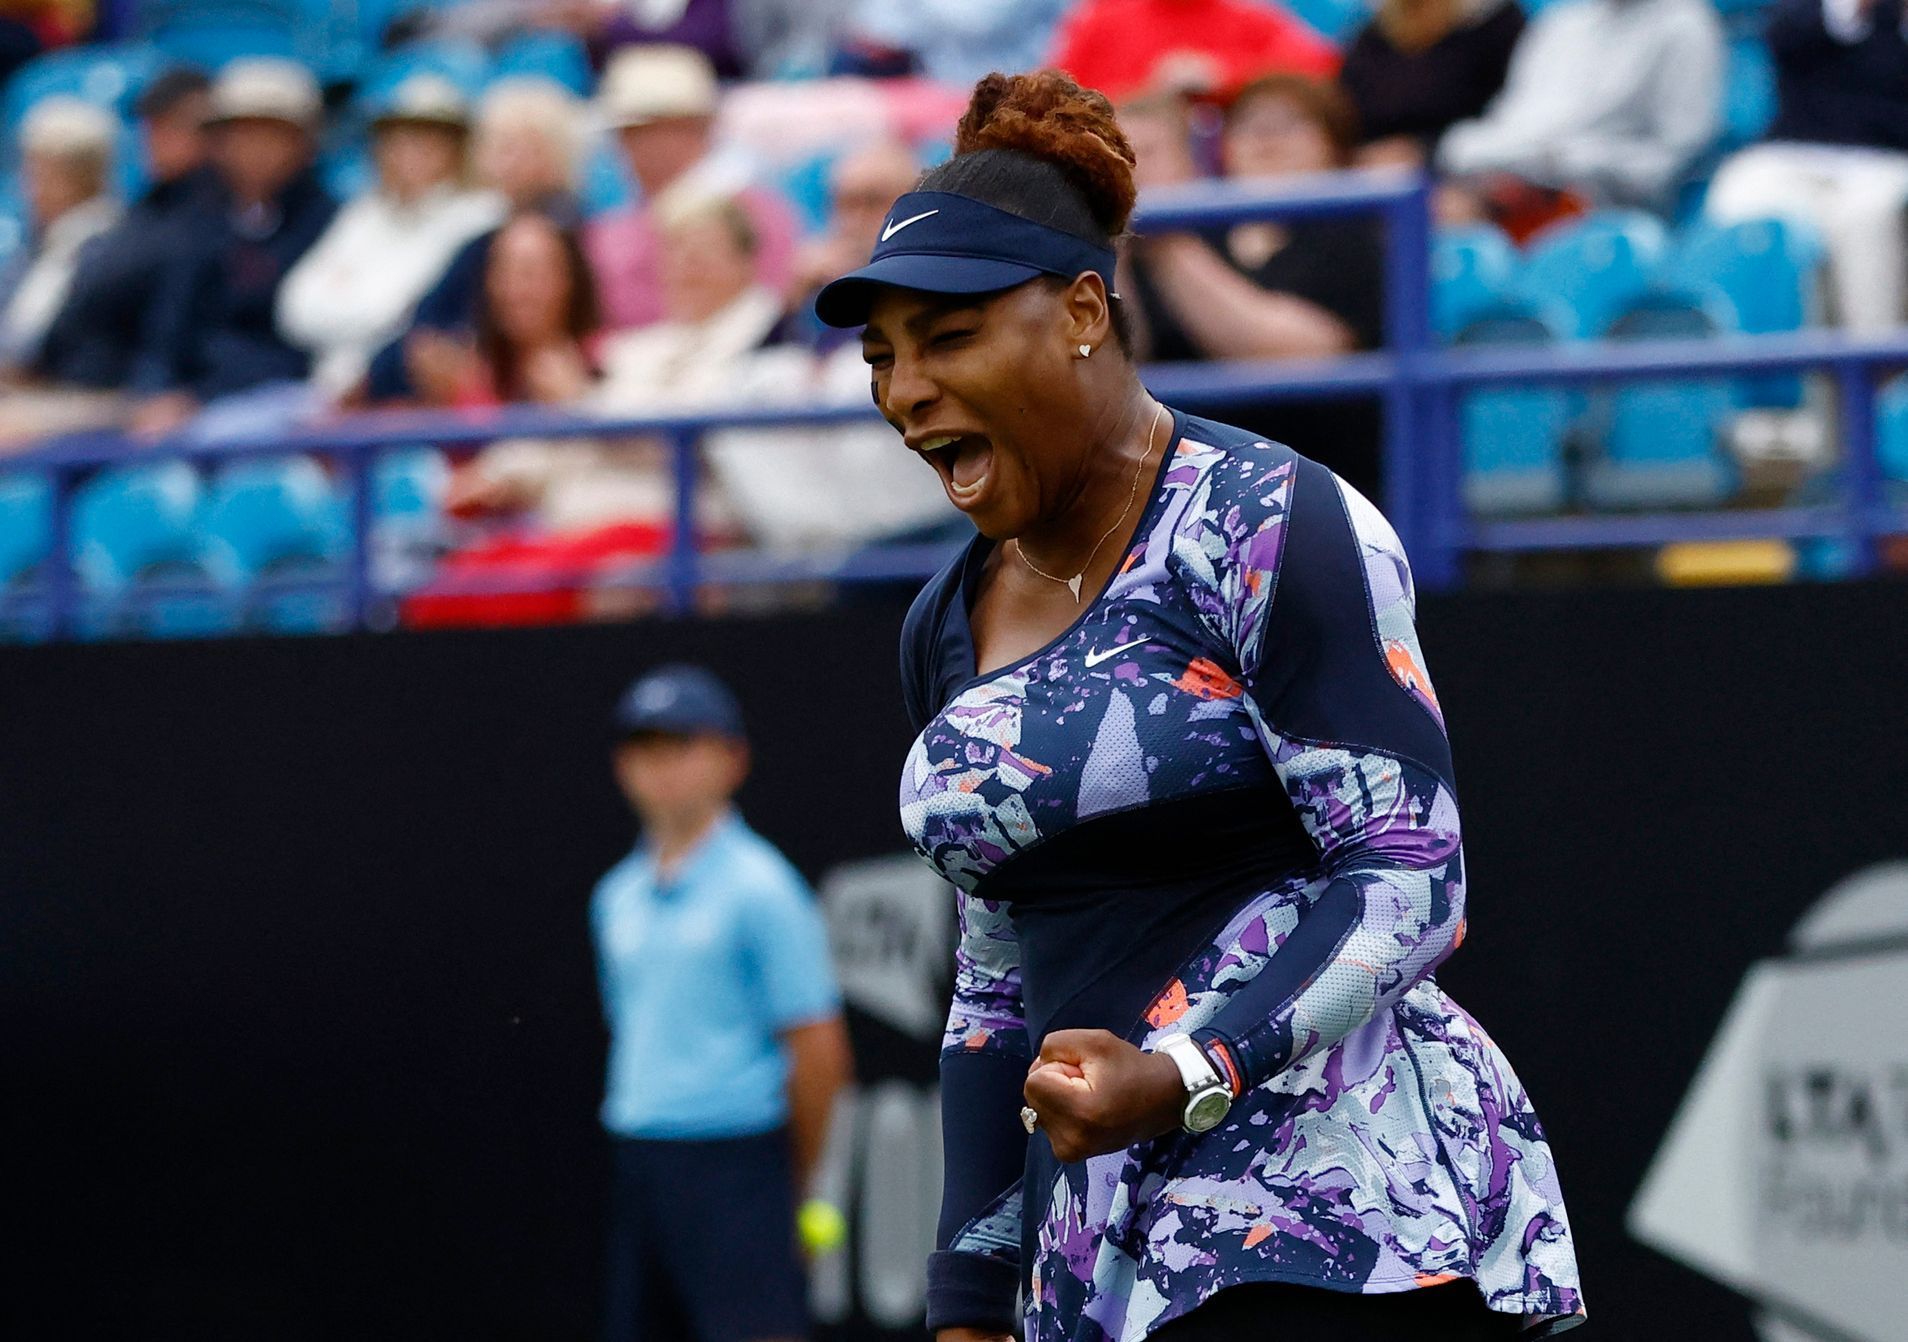 Serena Williamsová při návratu na turnaji v Eastbourne